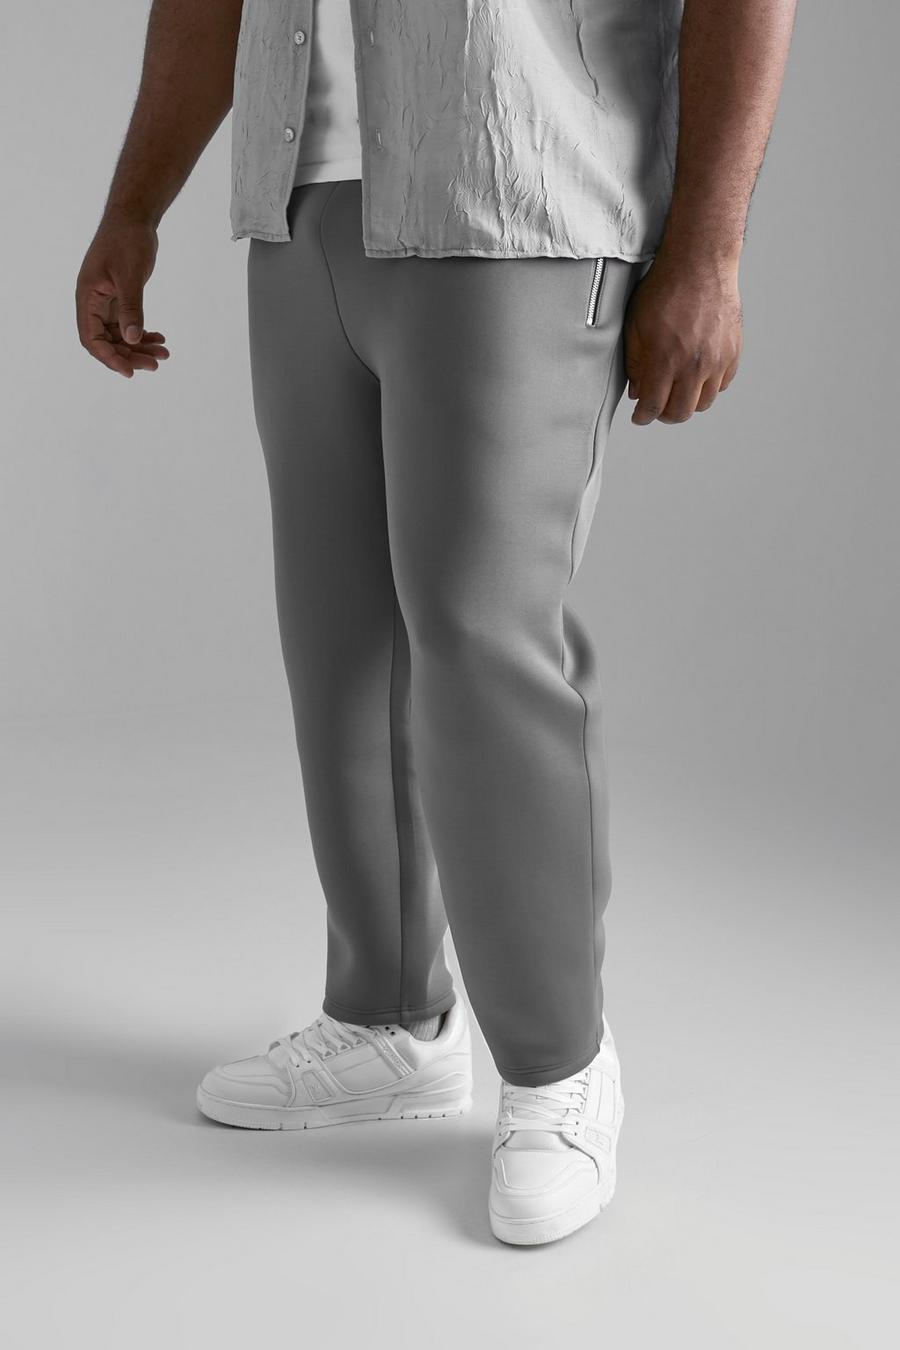 Pantalón Plus ajustado de neopreno, Grey grigio